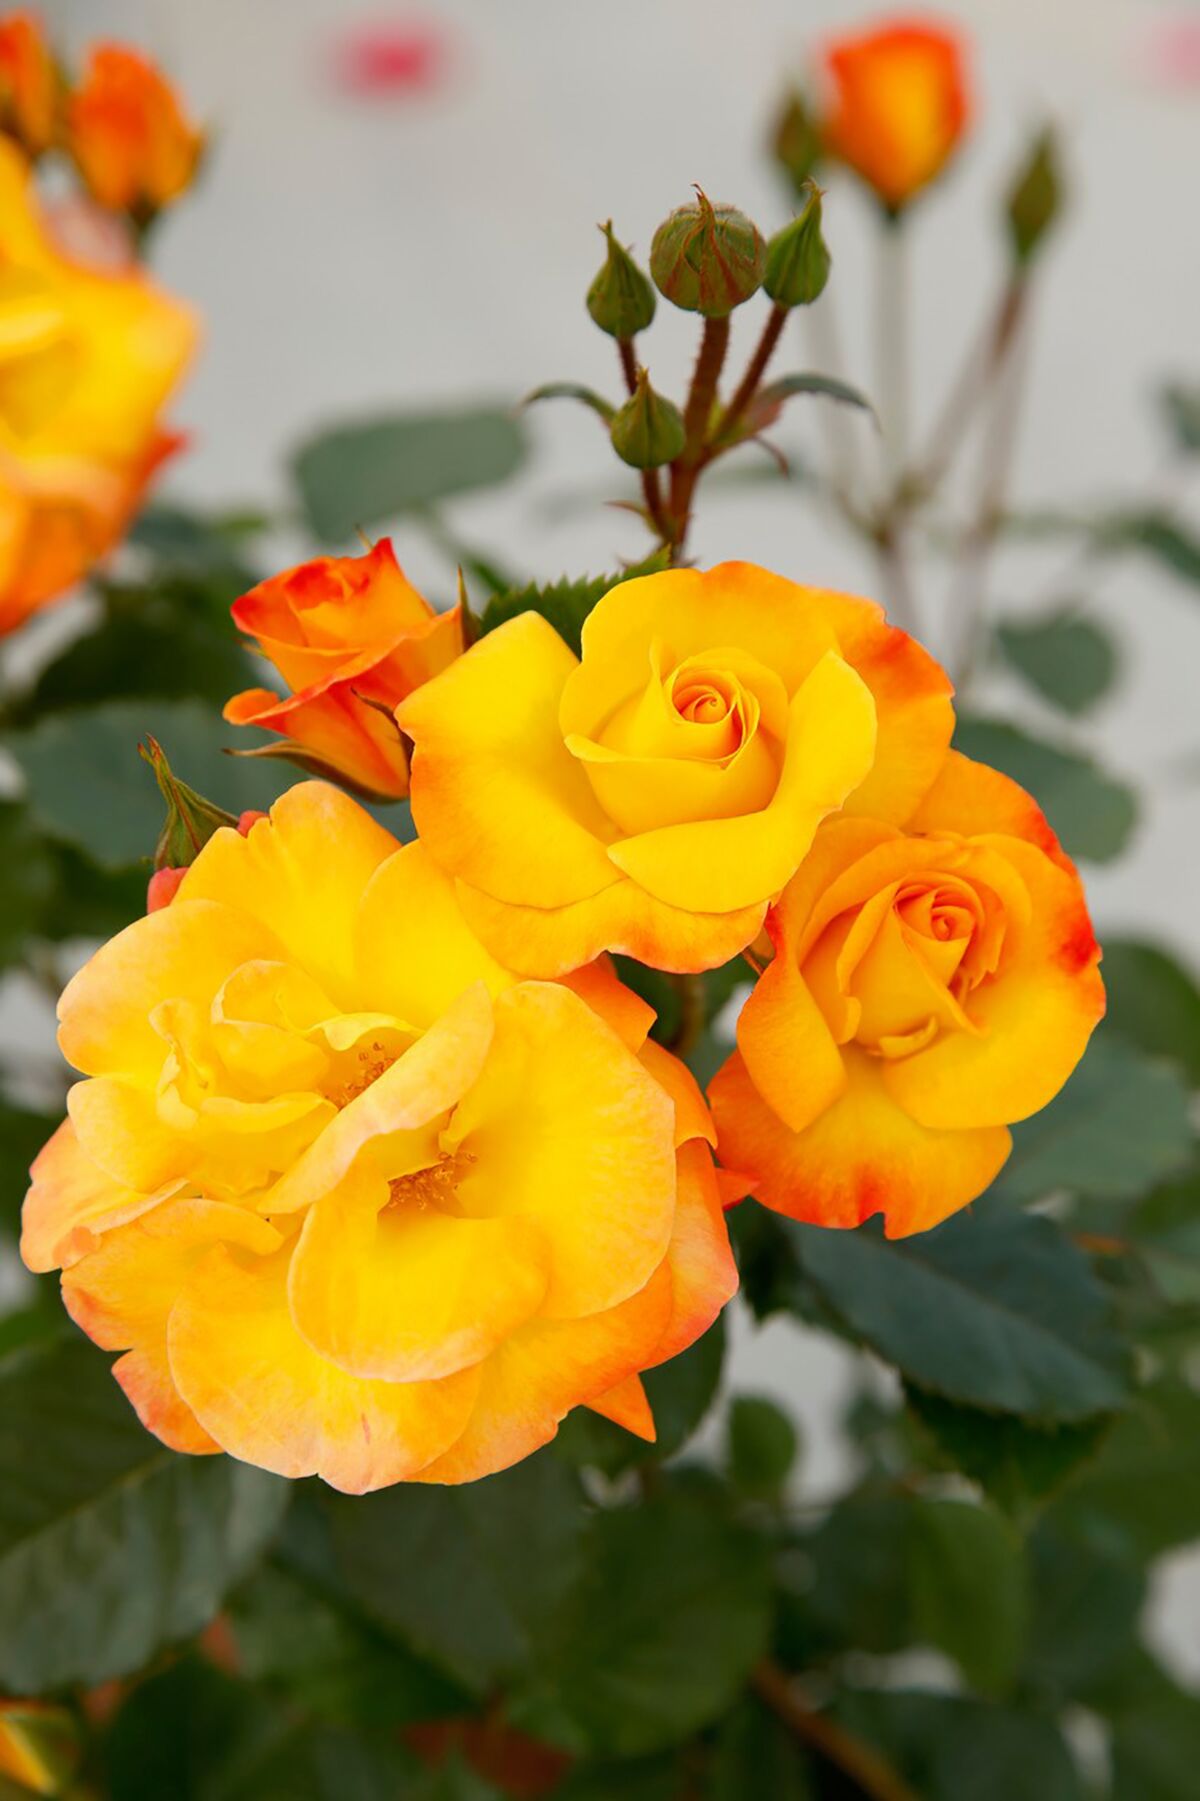 'Fiesta Verandah' is a floribunda with strong bright orange and yellow colors and dark green foliage.